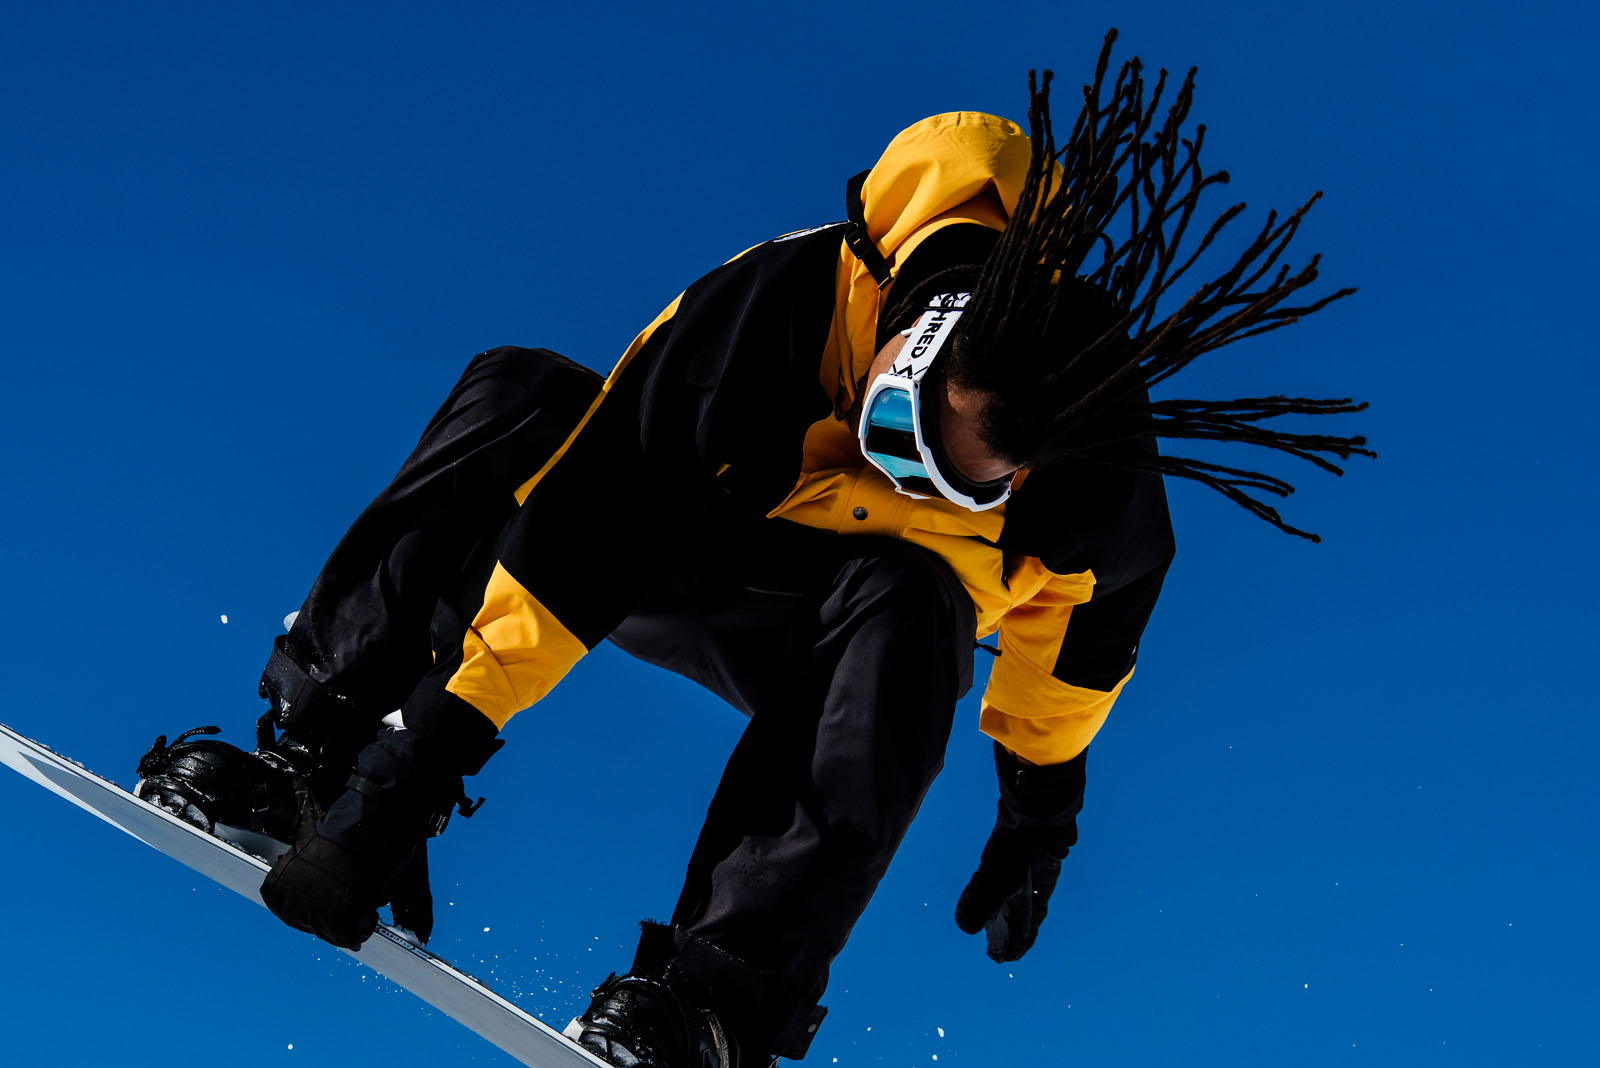 david-djites-film-eudemonia-captures-true-beauty-snowboarding-012